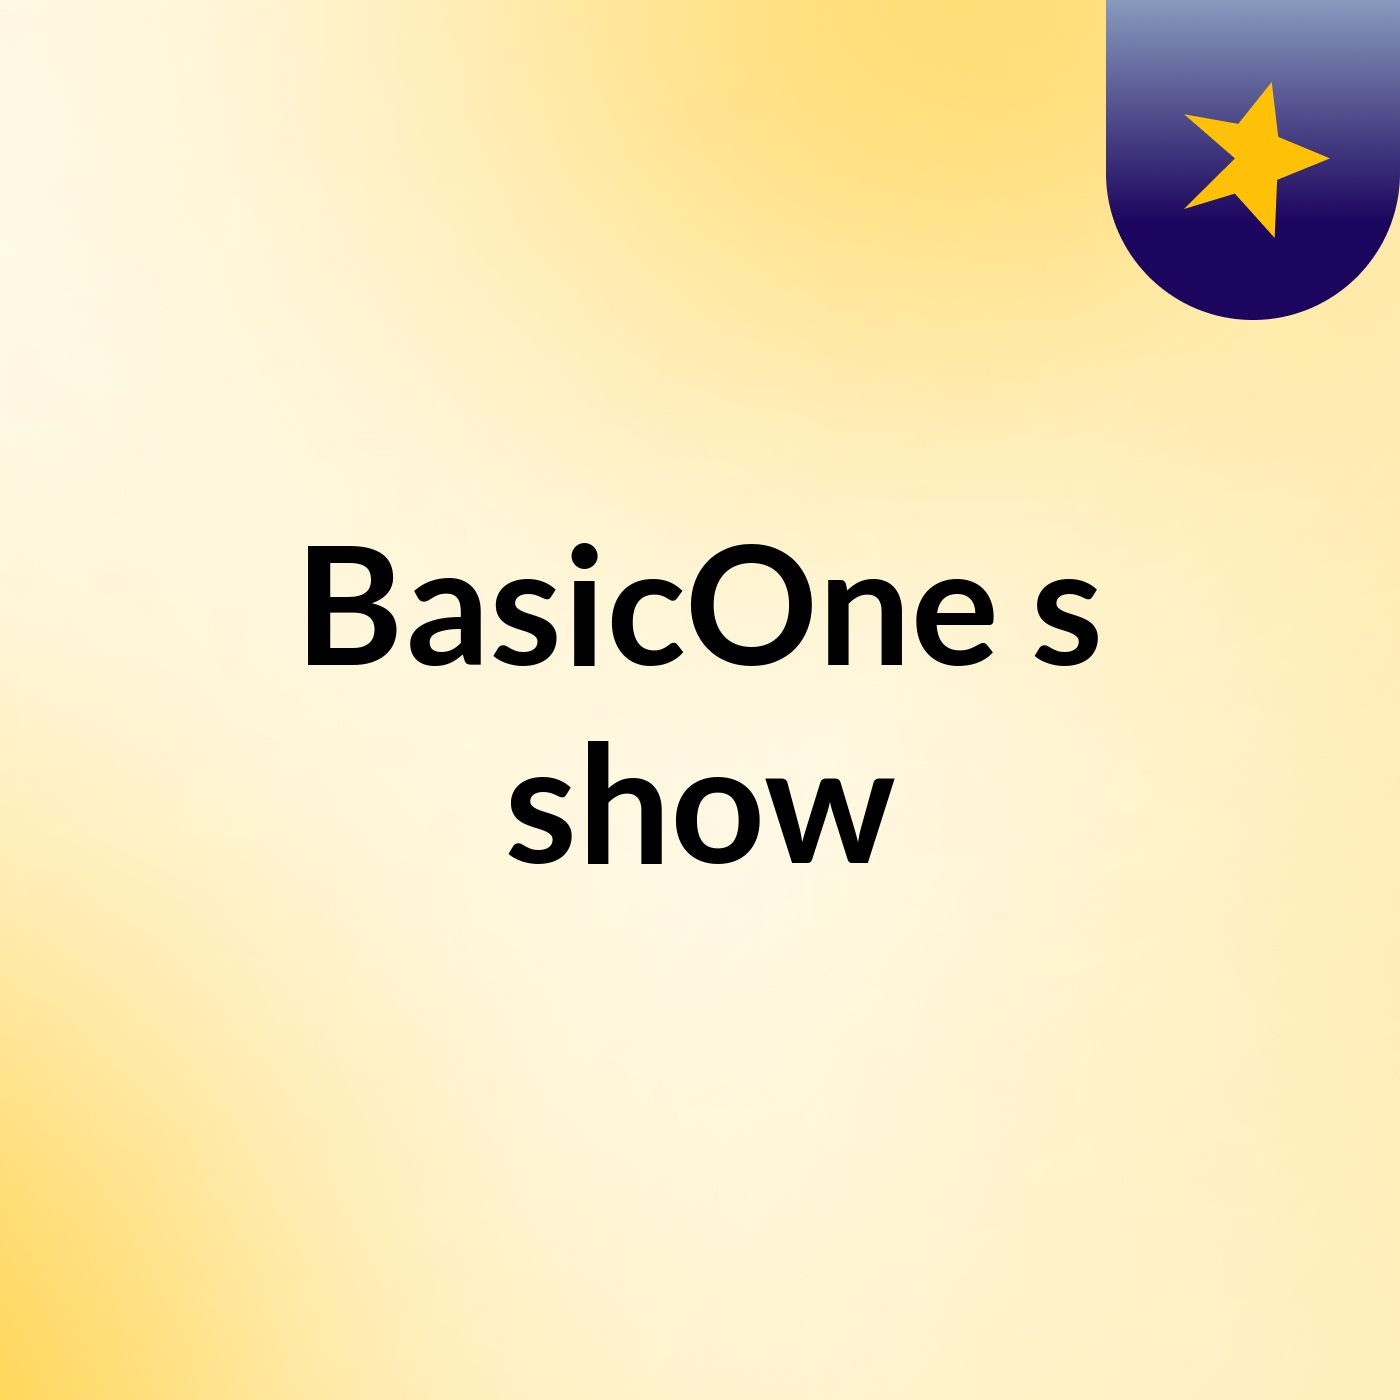 BasicOne's show